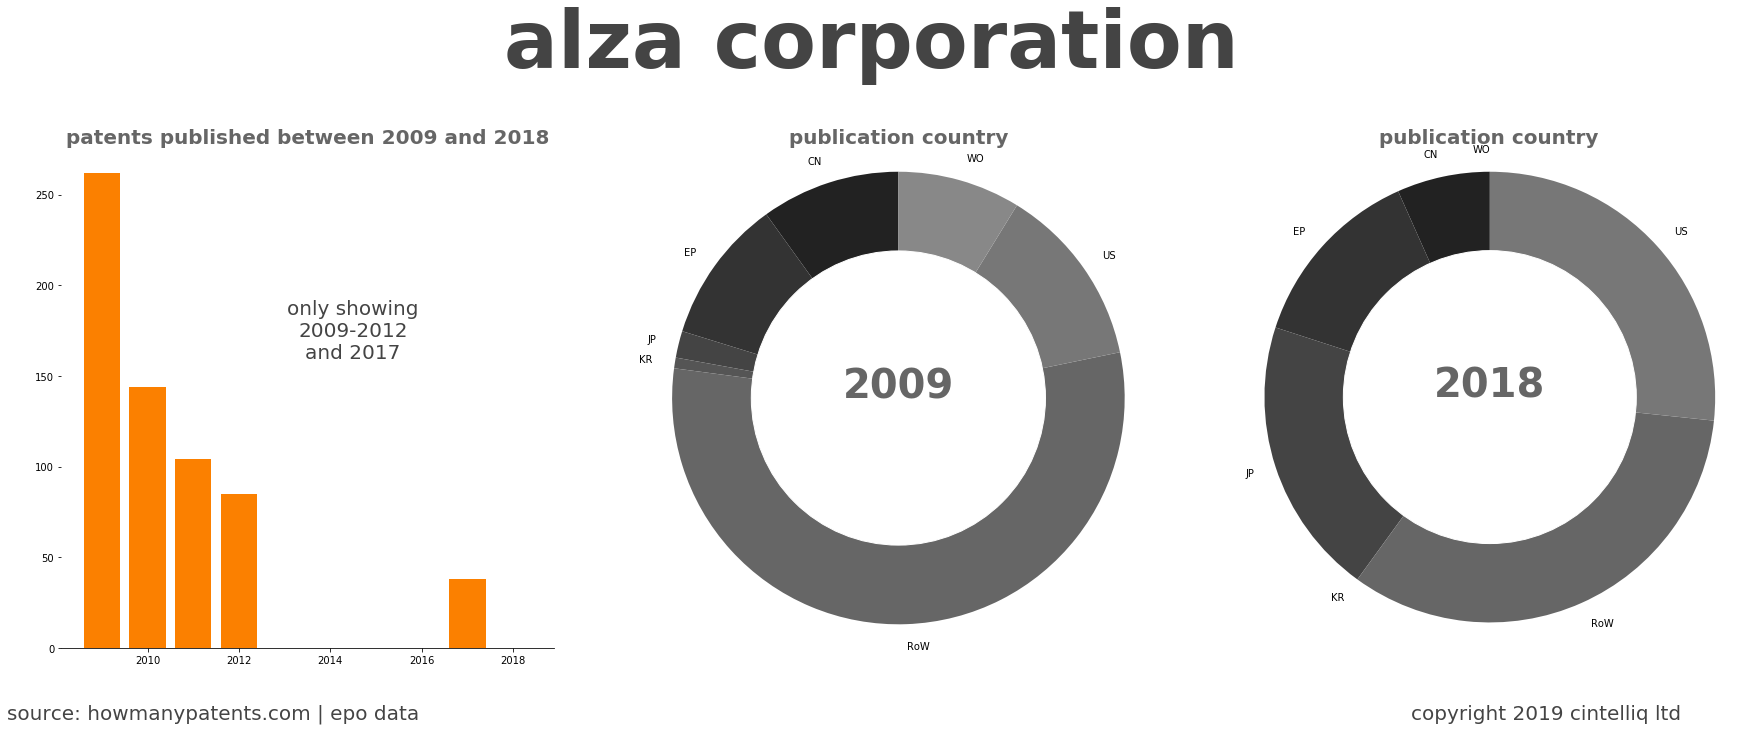 summary of patents for Alza Corporation